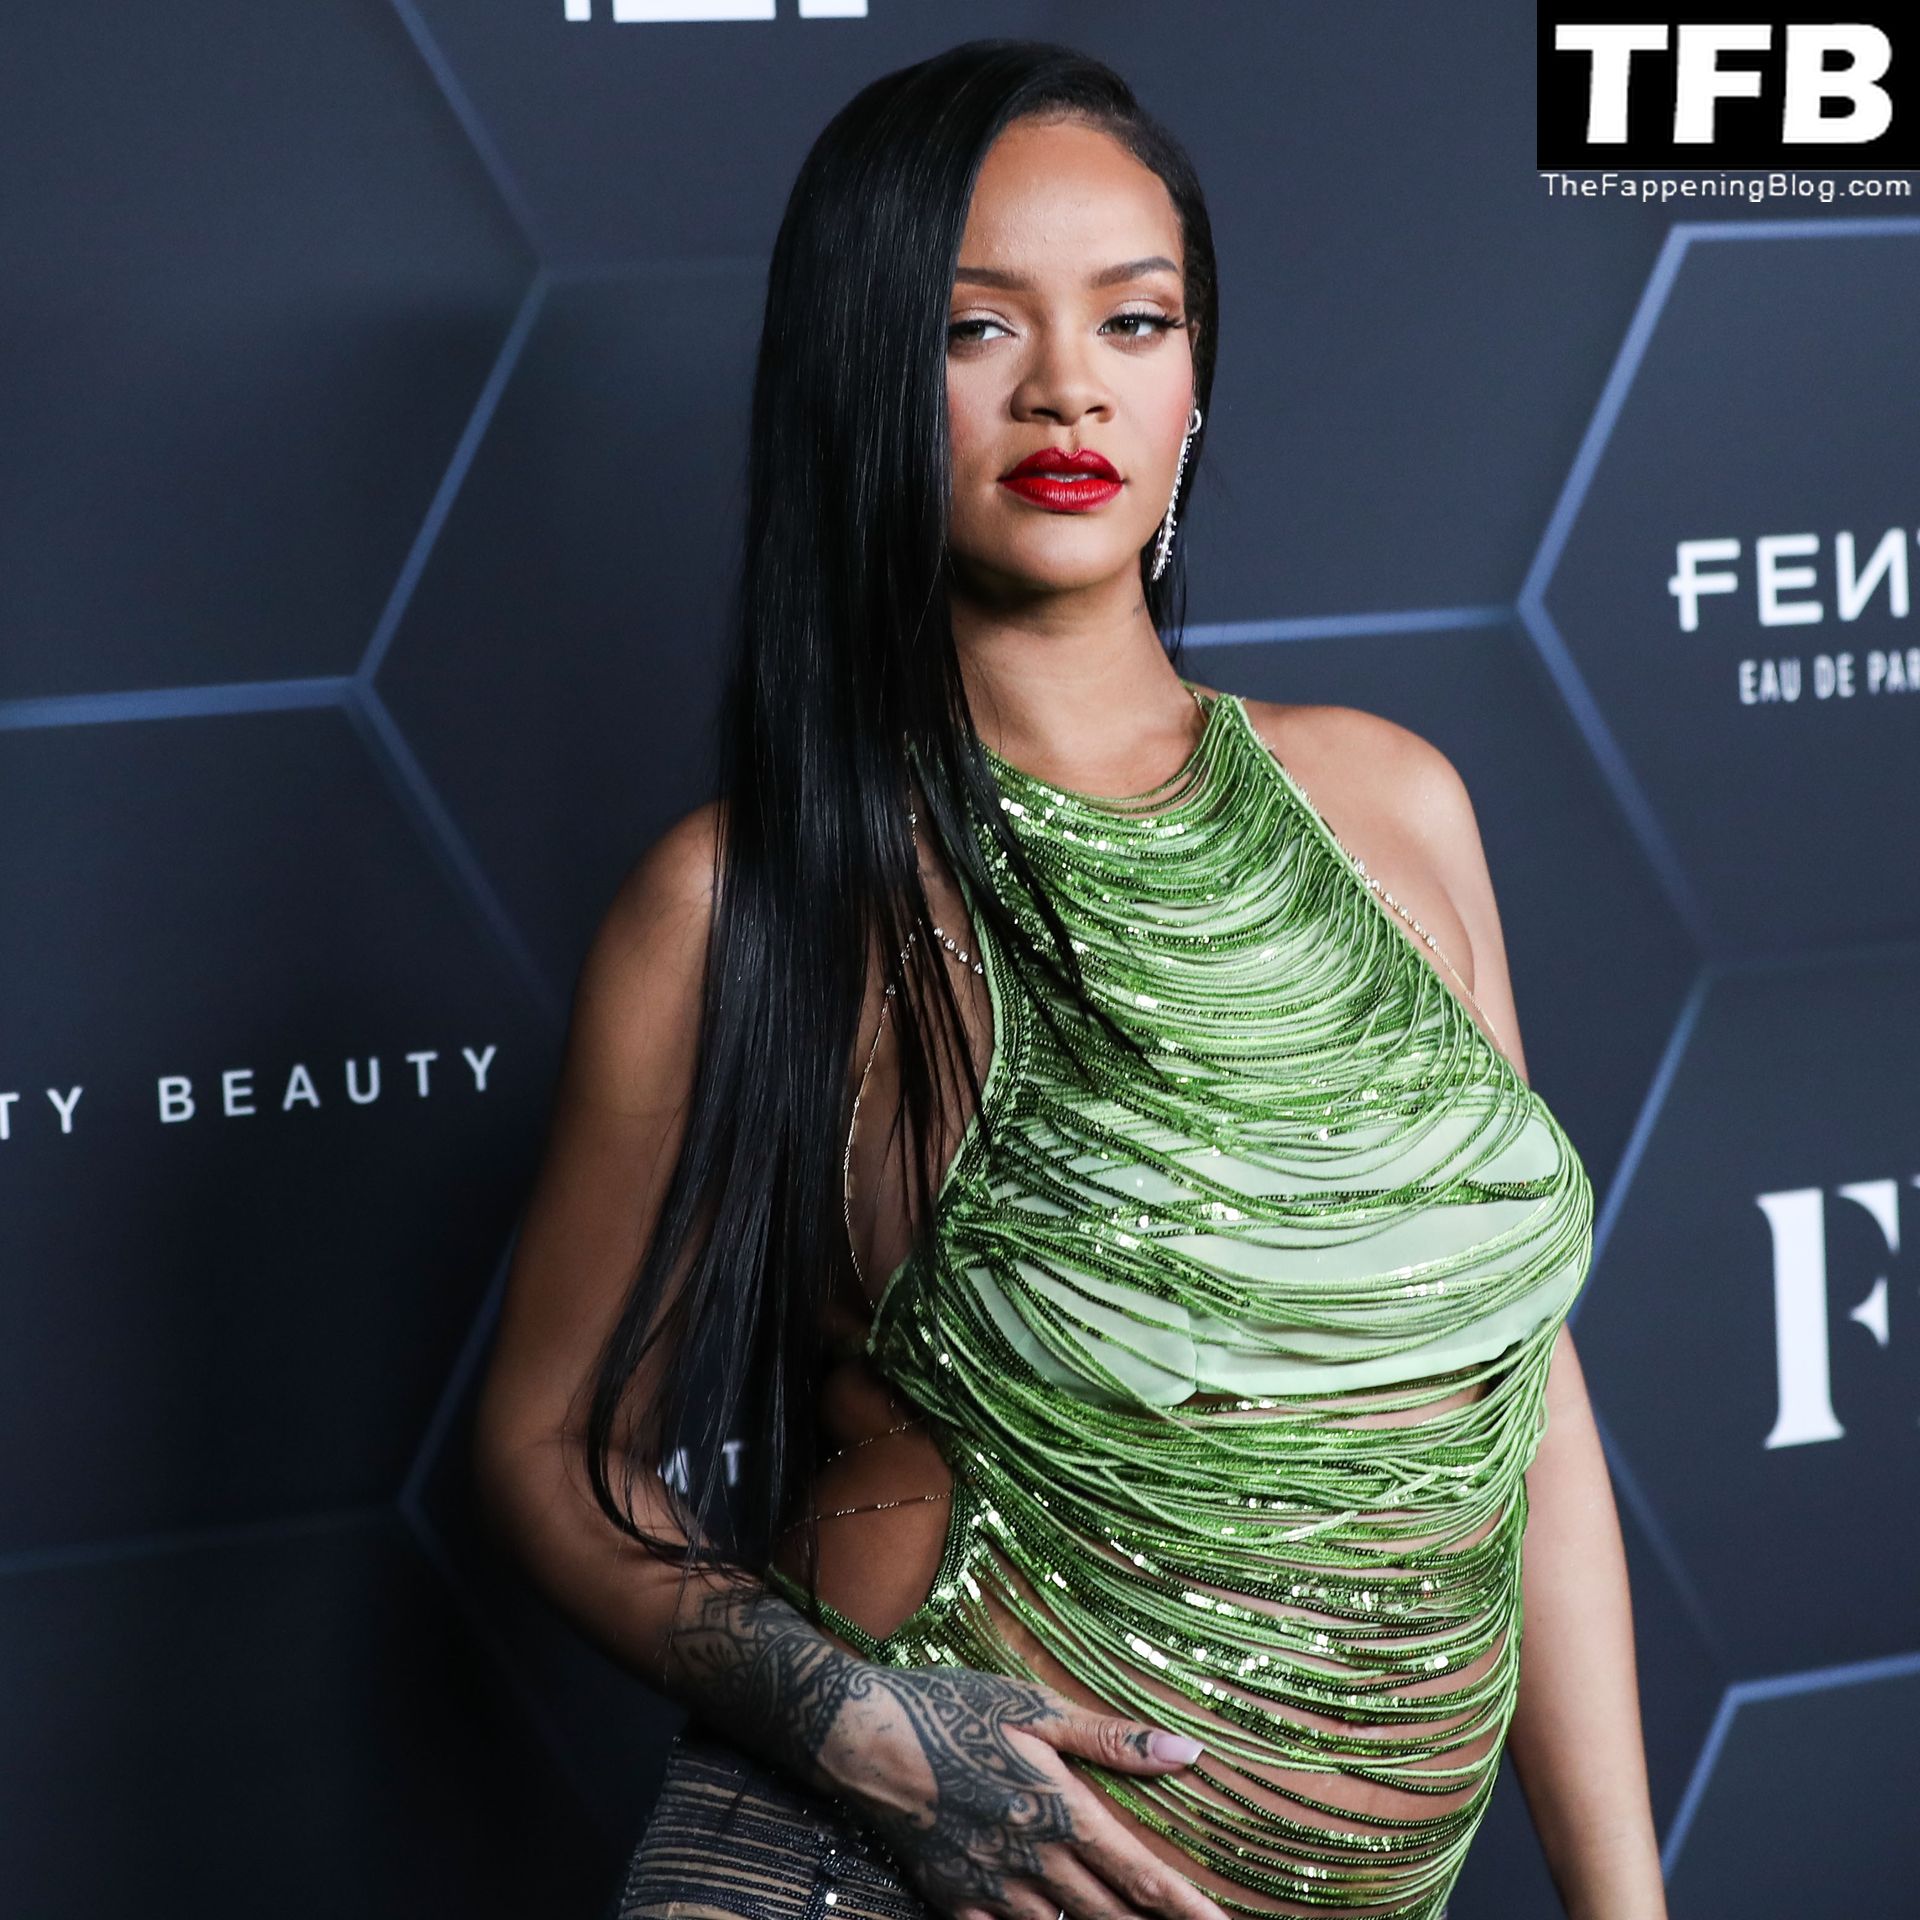 Rihanna-Sexy-The-Fappening-Blog-29.jpg